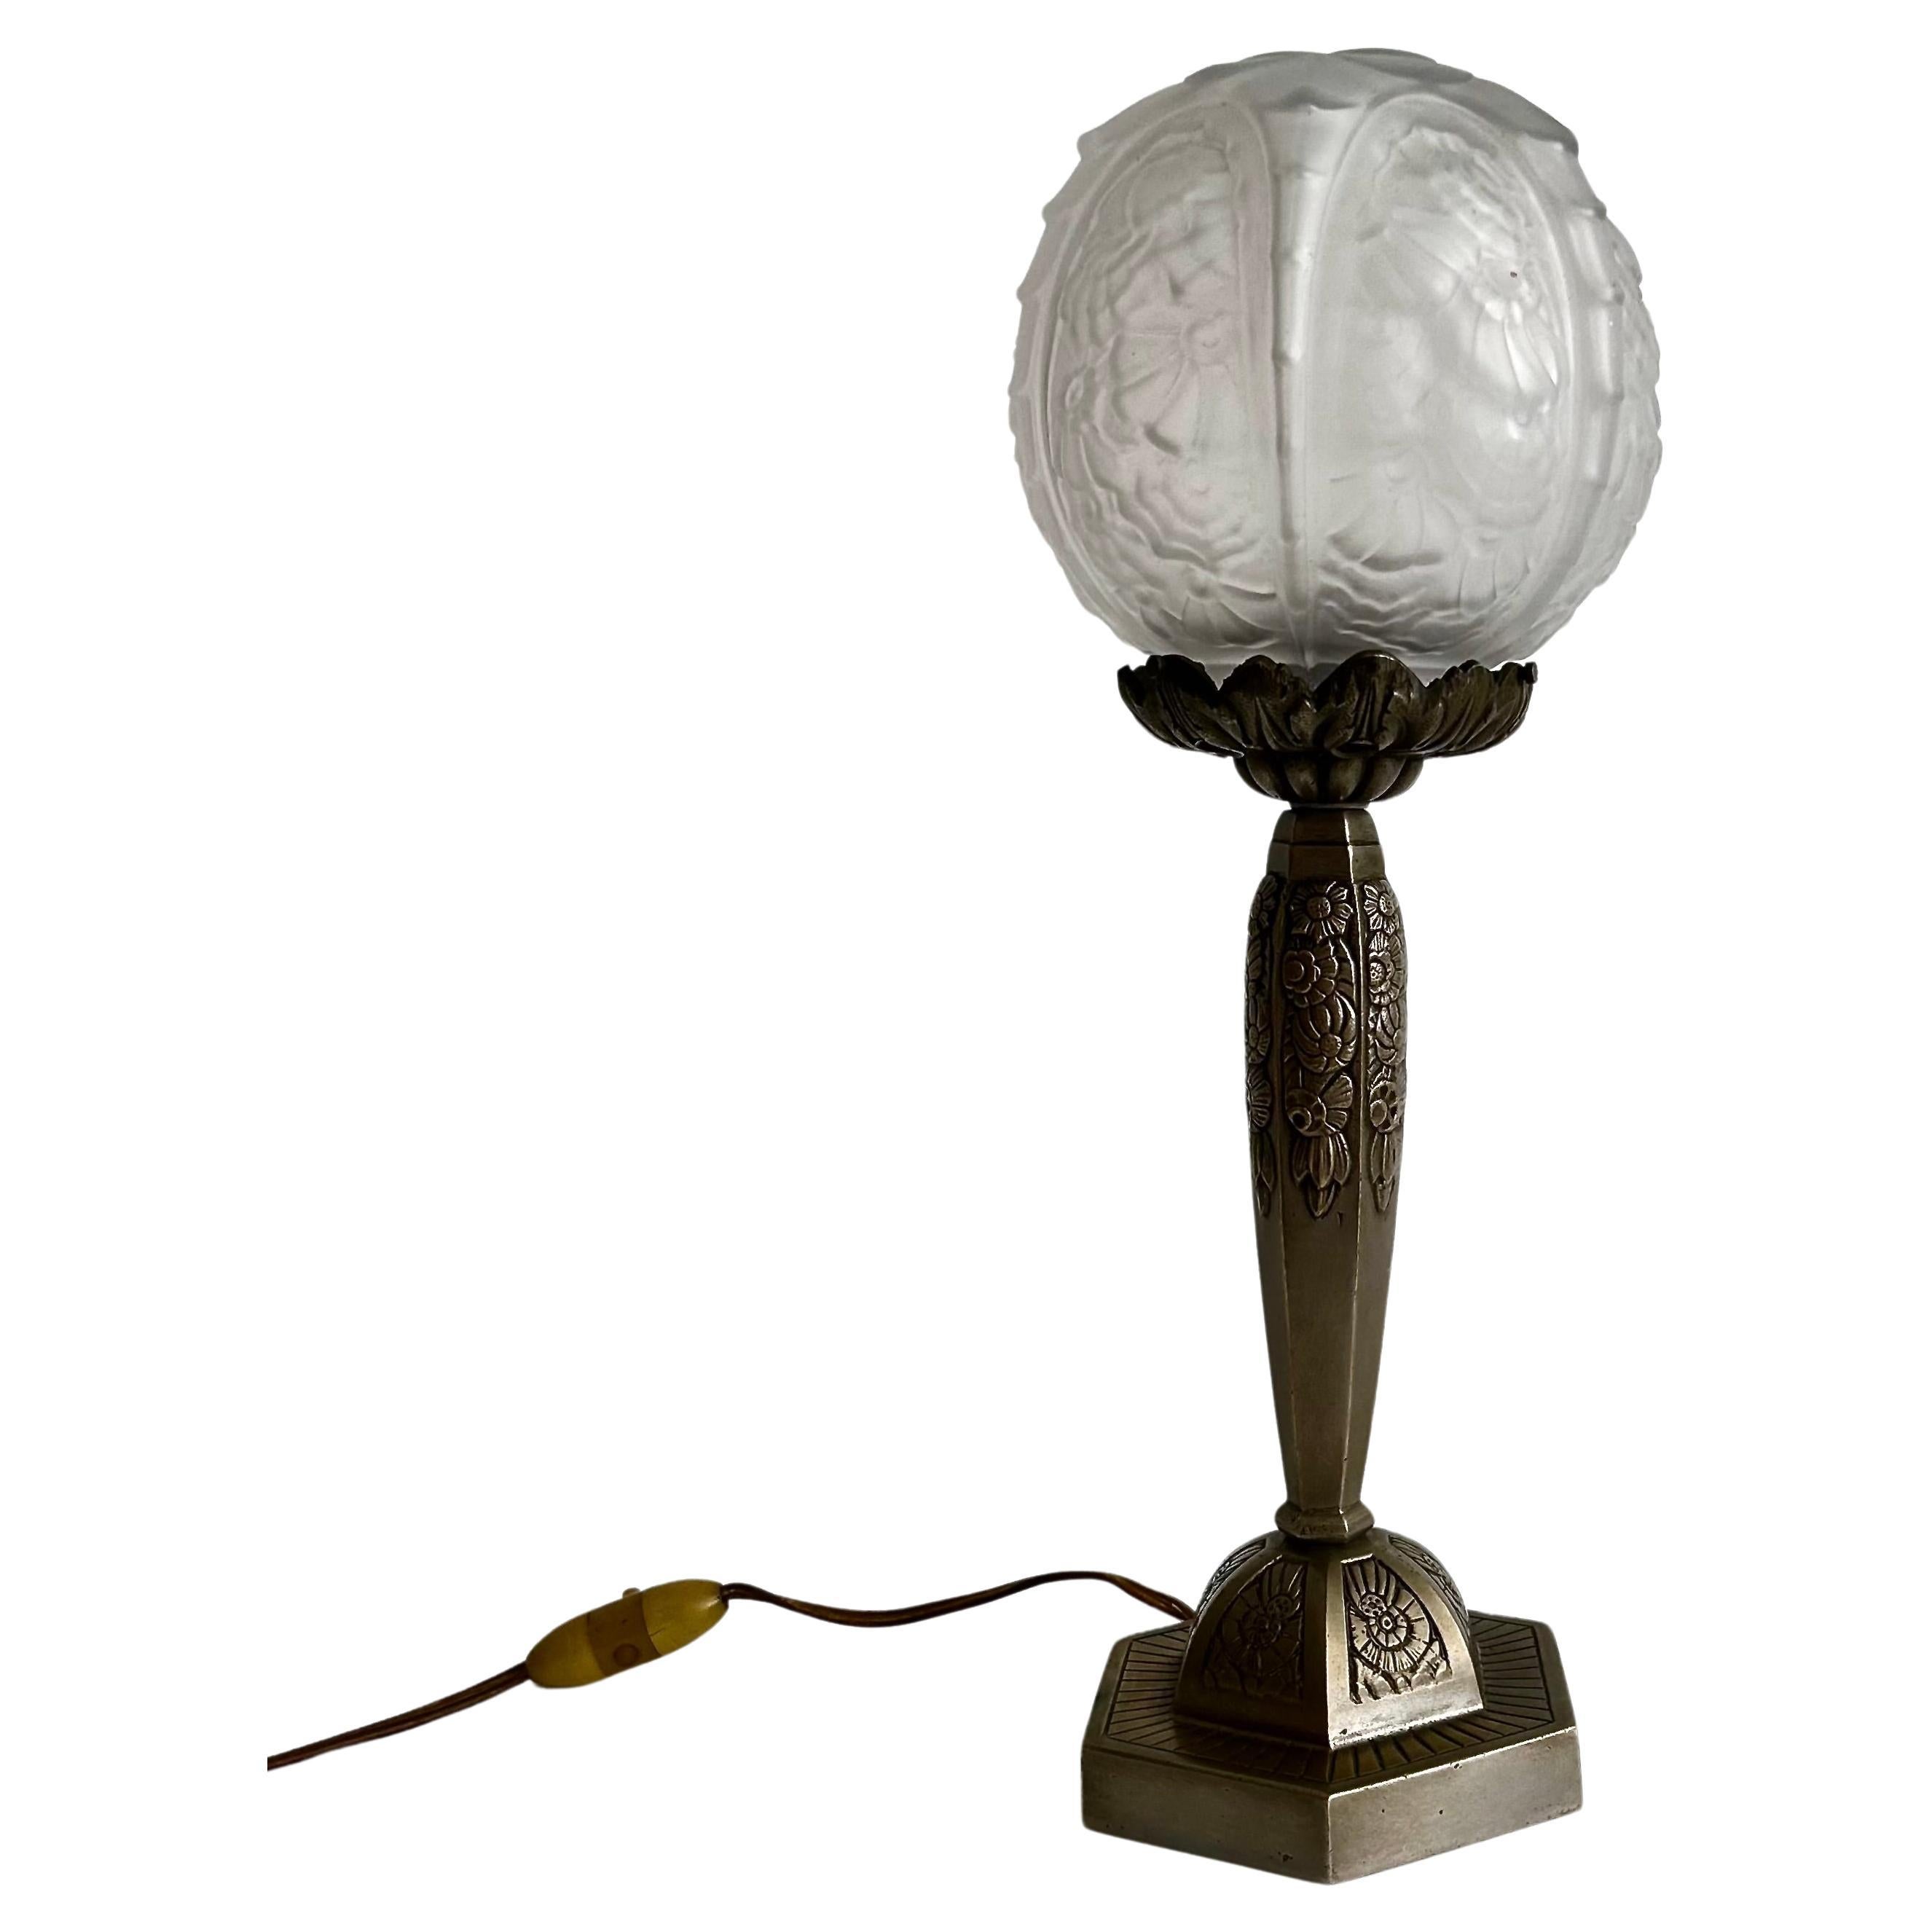 Circa 1920s Art Deco Table Lamp